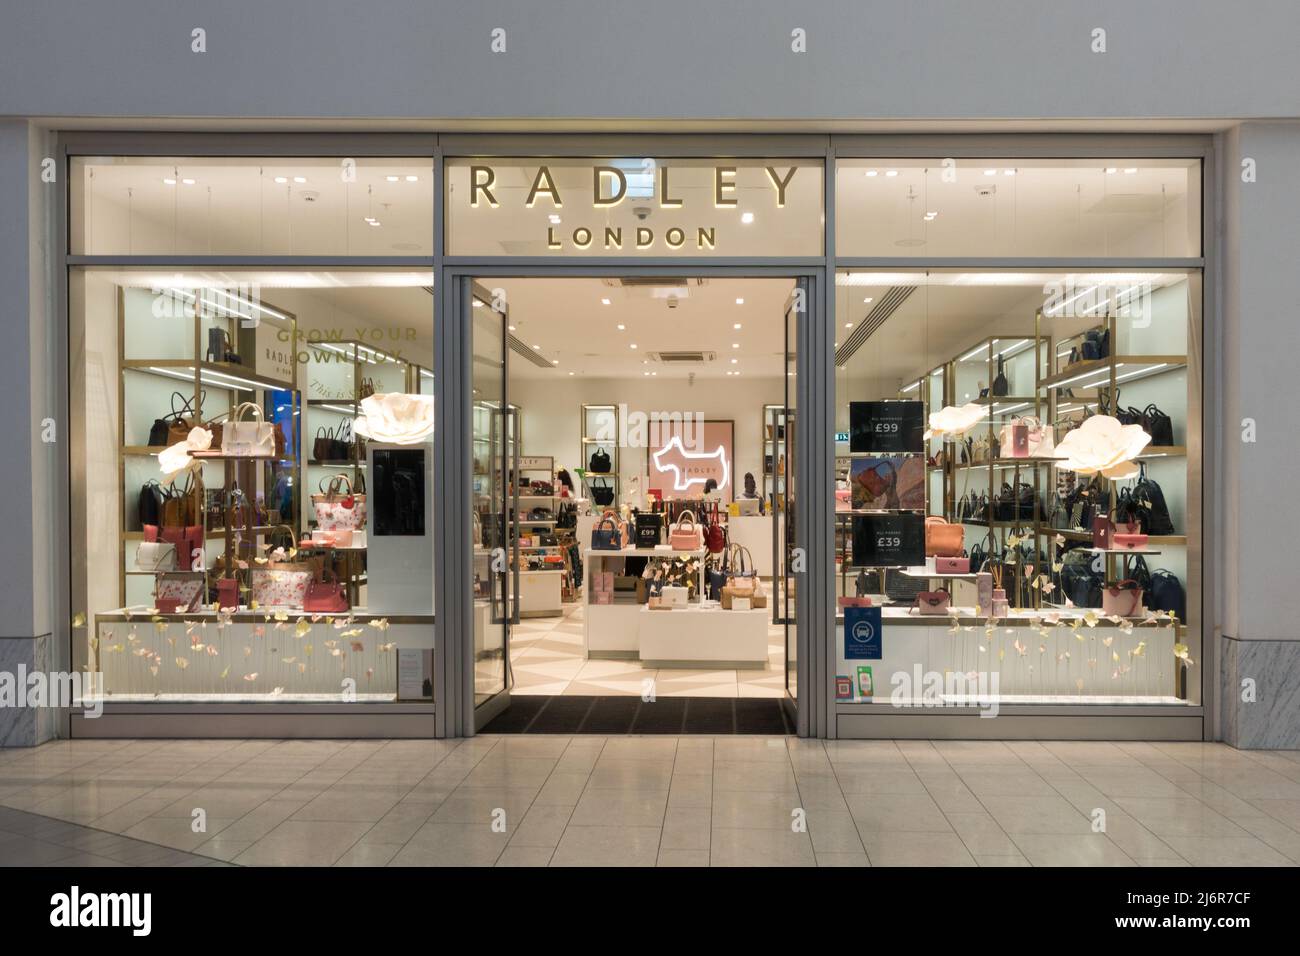 RADLEY London store front Stock Photo